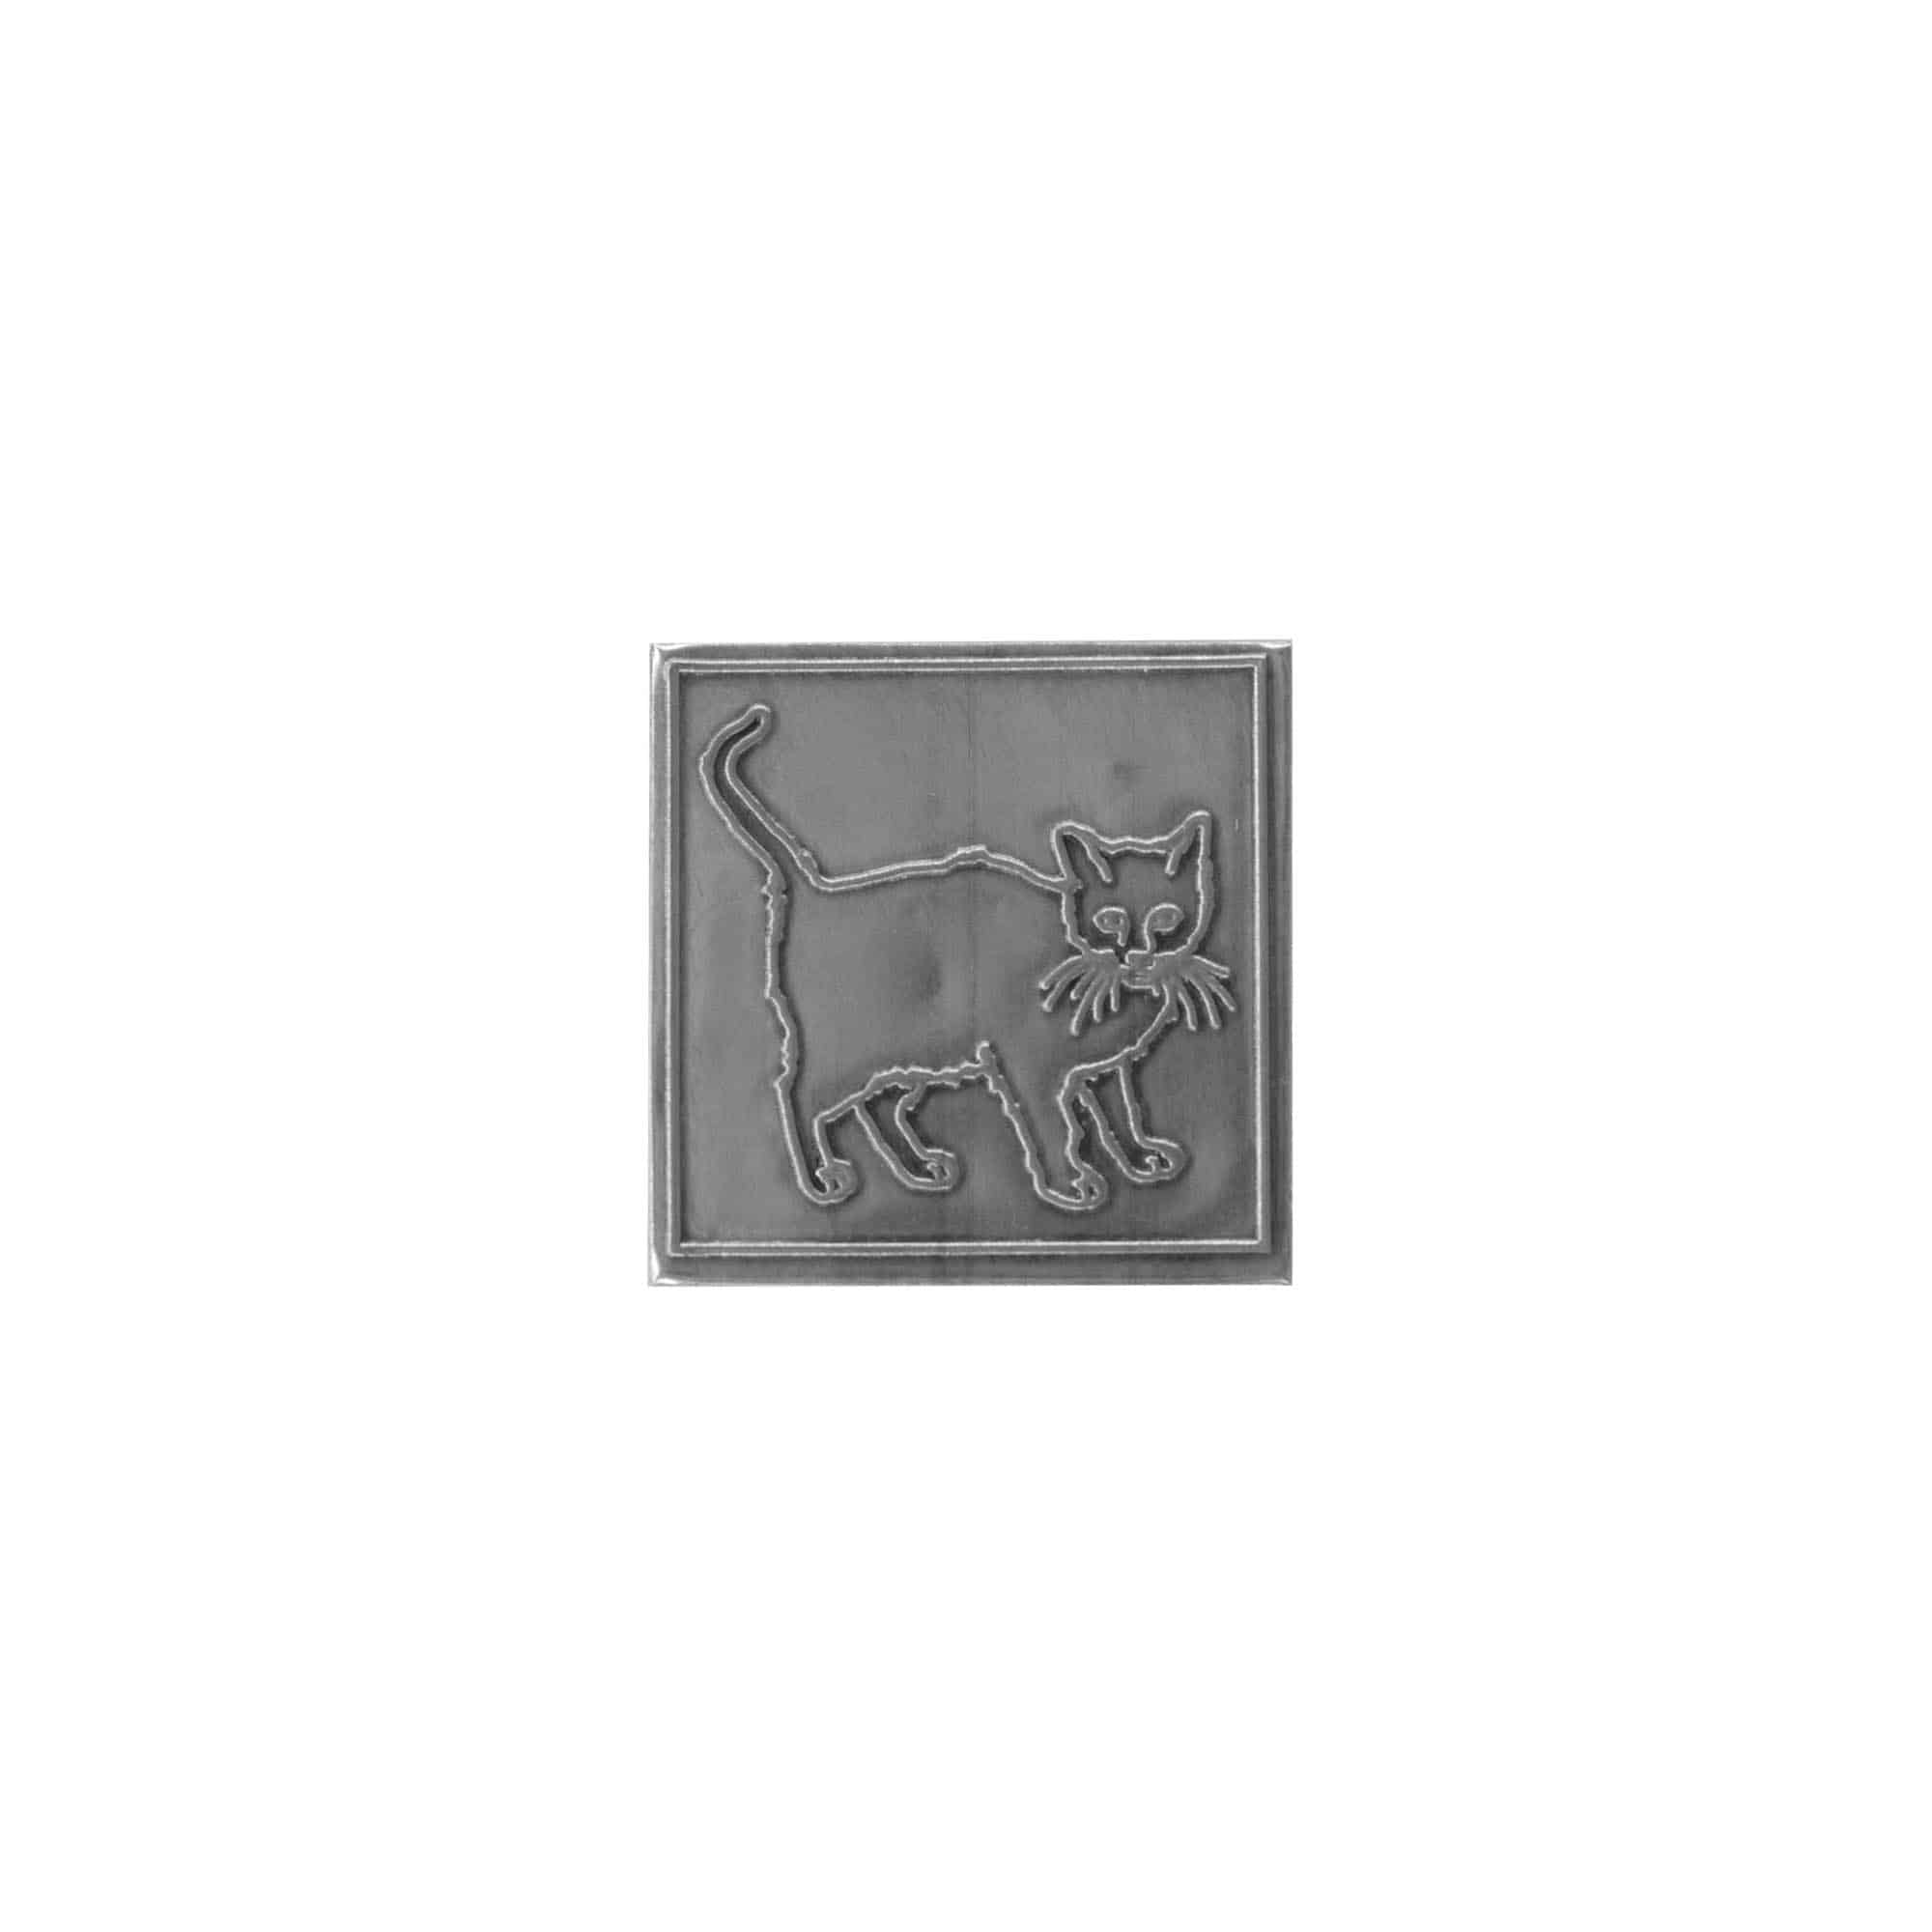 Etykieta cynowa 'Kot', kwadratowa, metal, kolor srebrny